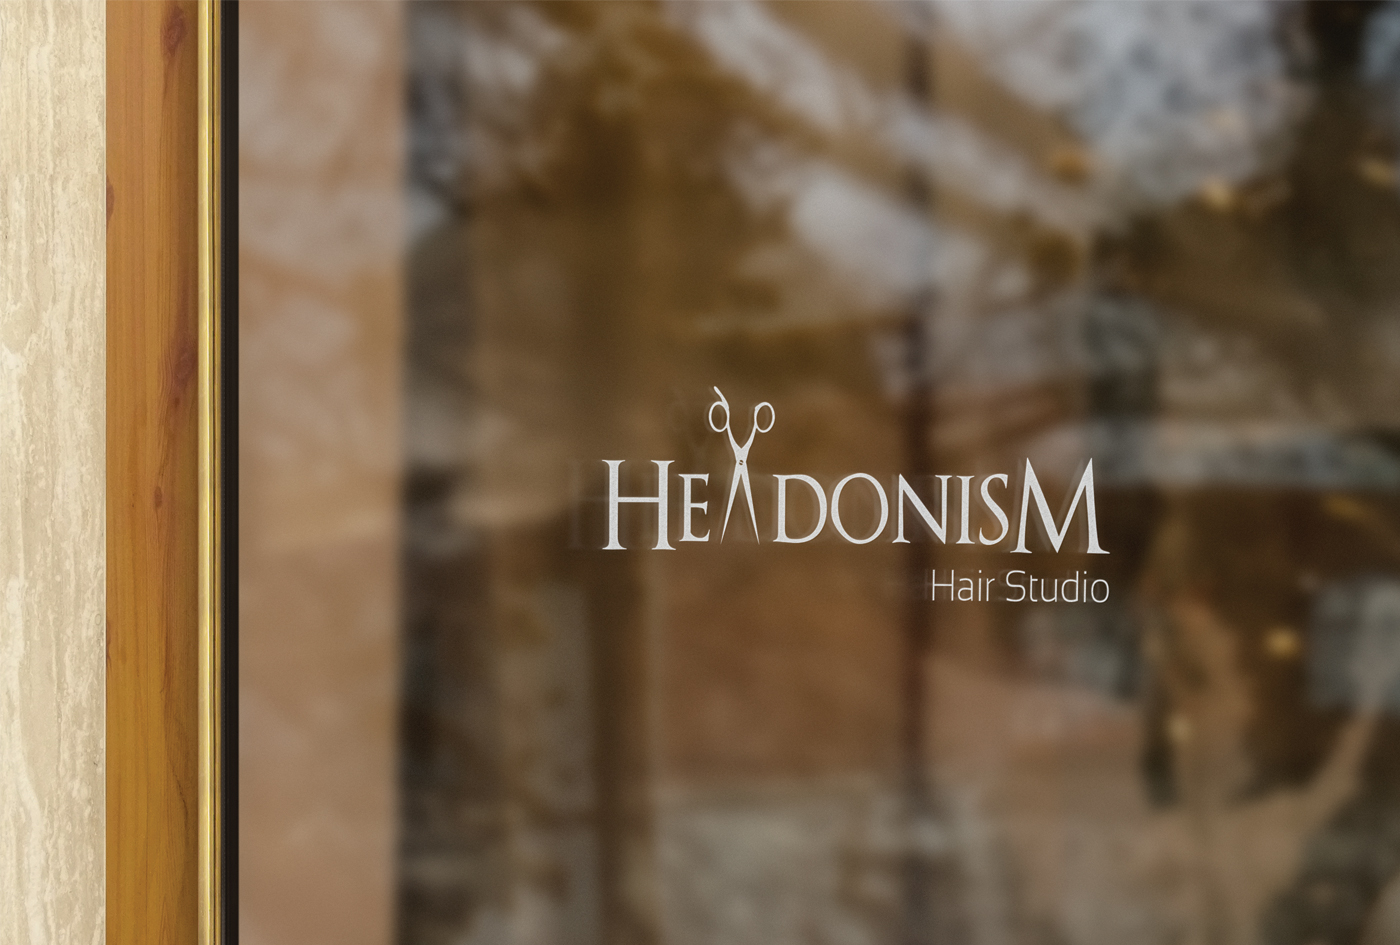 Salon window displaying Headonism logo